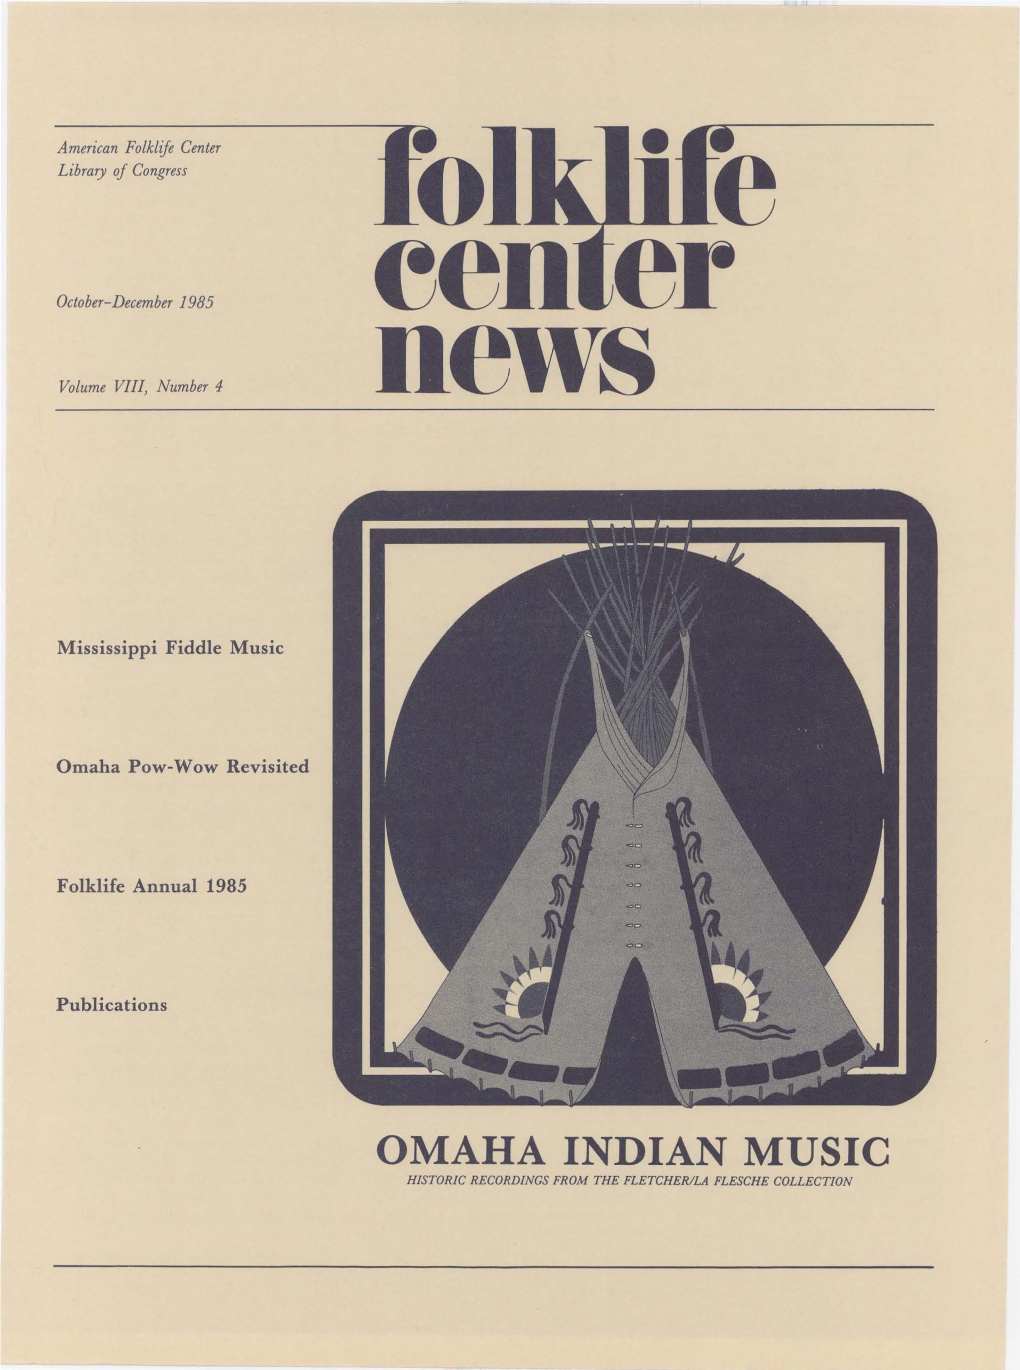 Folklife Center News, Volume VIII Number 4 (October-December 1985). American Folklife Center, Library of Congress